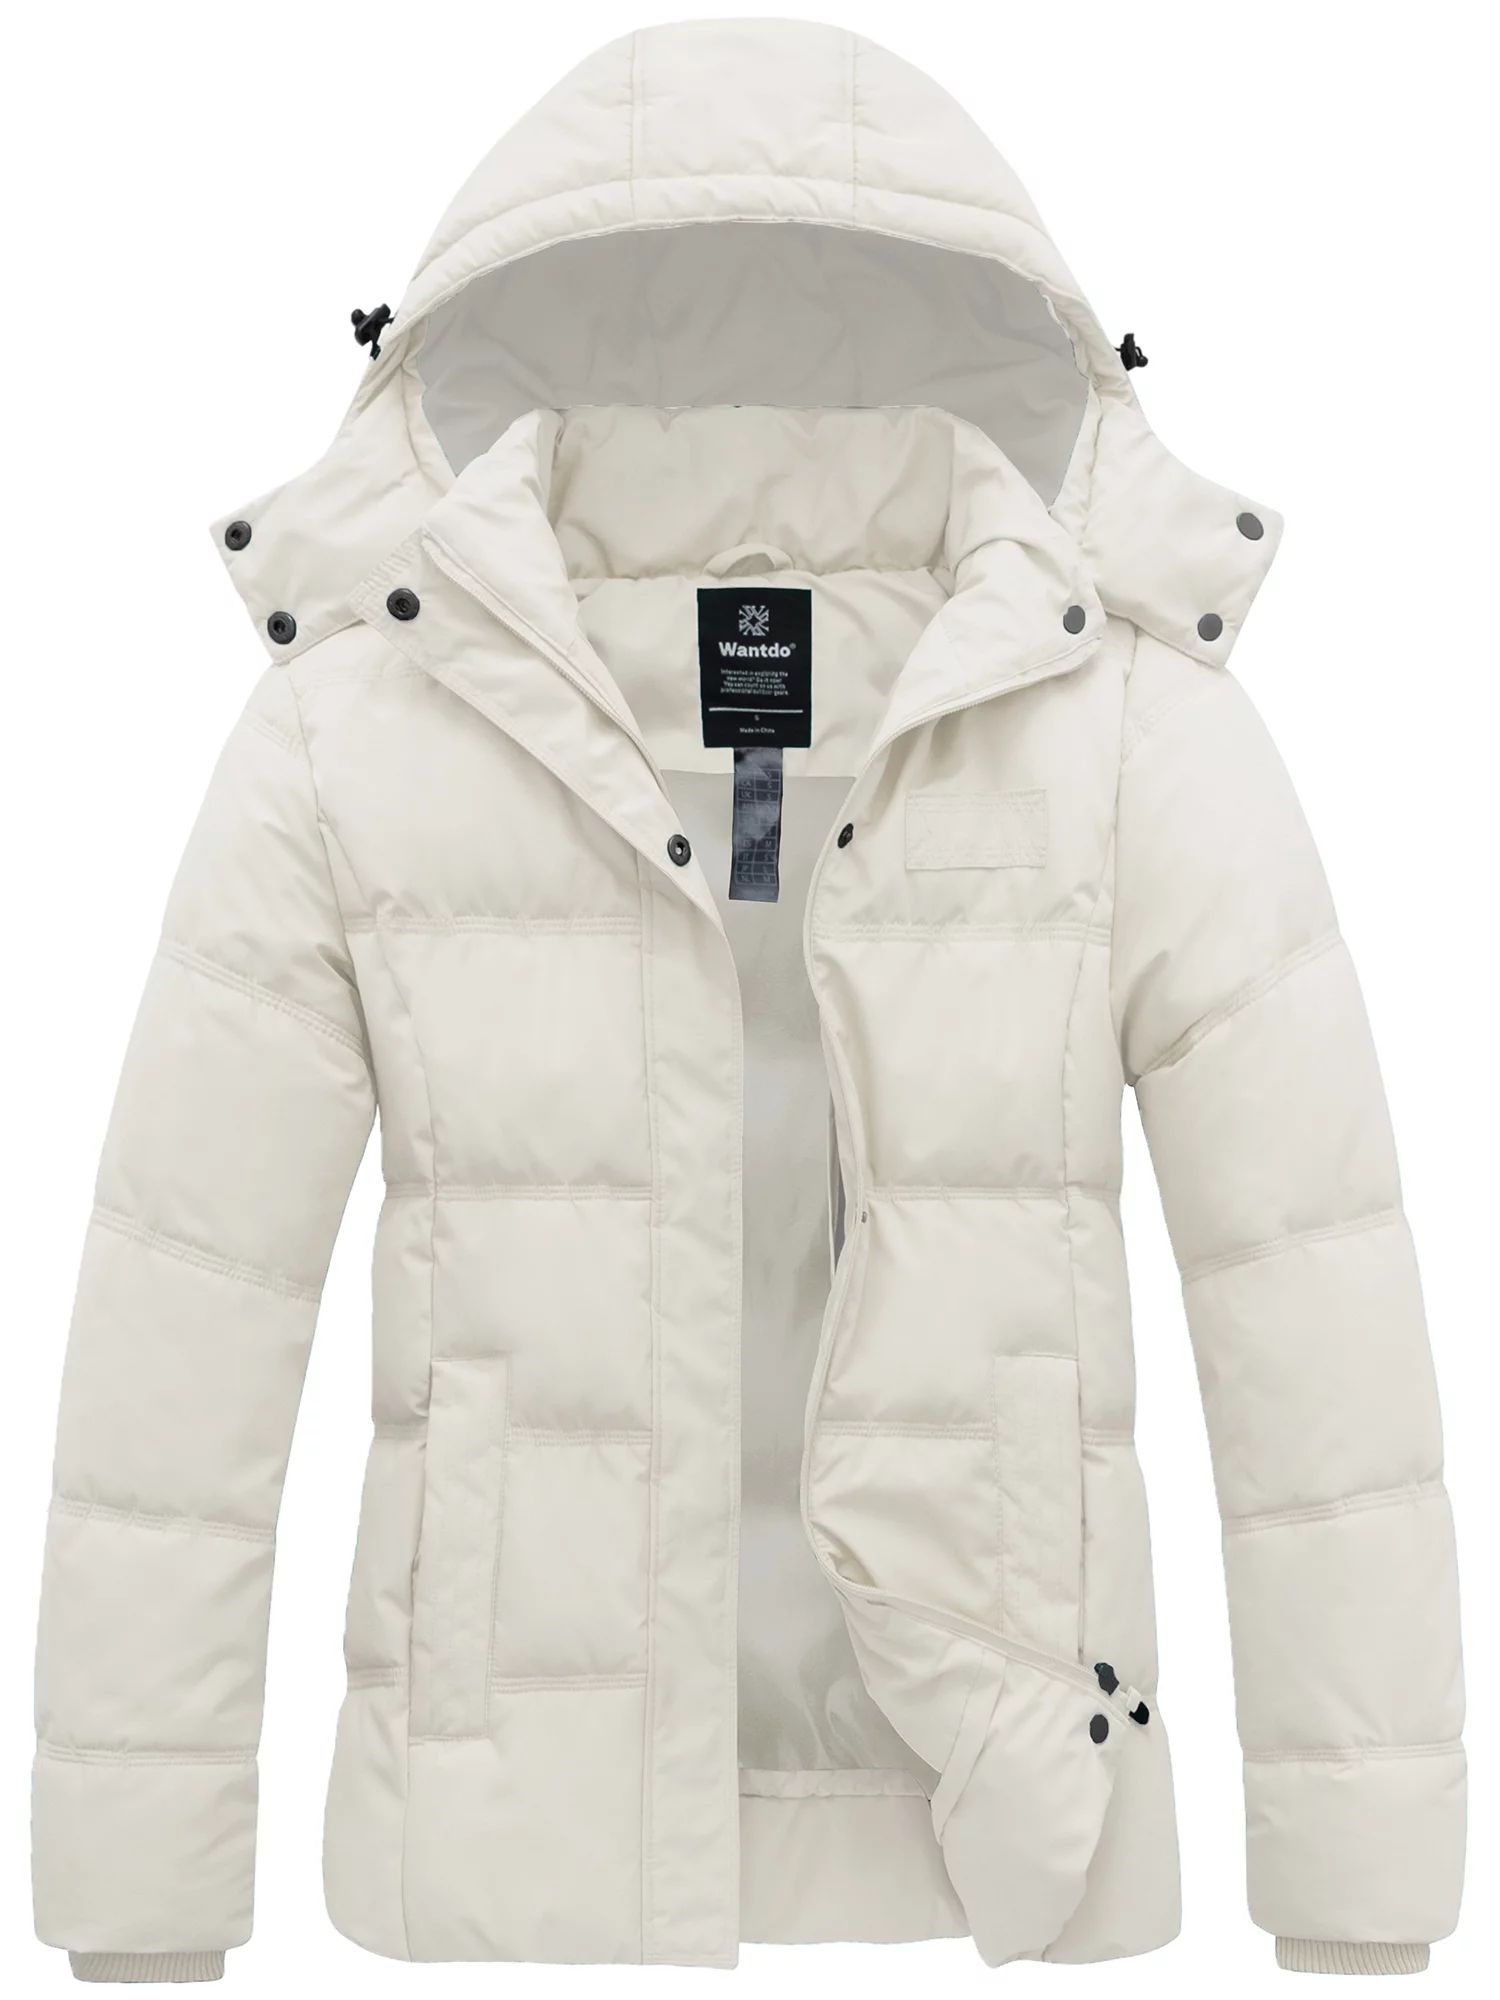 Wantdo Women's Puffer Jacket Insulated Puffer Coat Quilted Outerwear Jacket Beige Medium | Walmart (US)